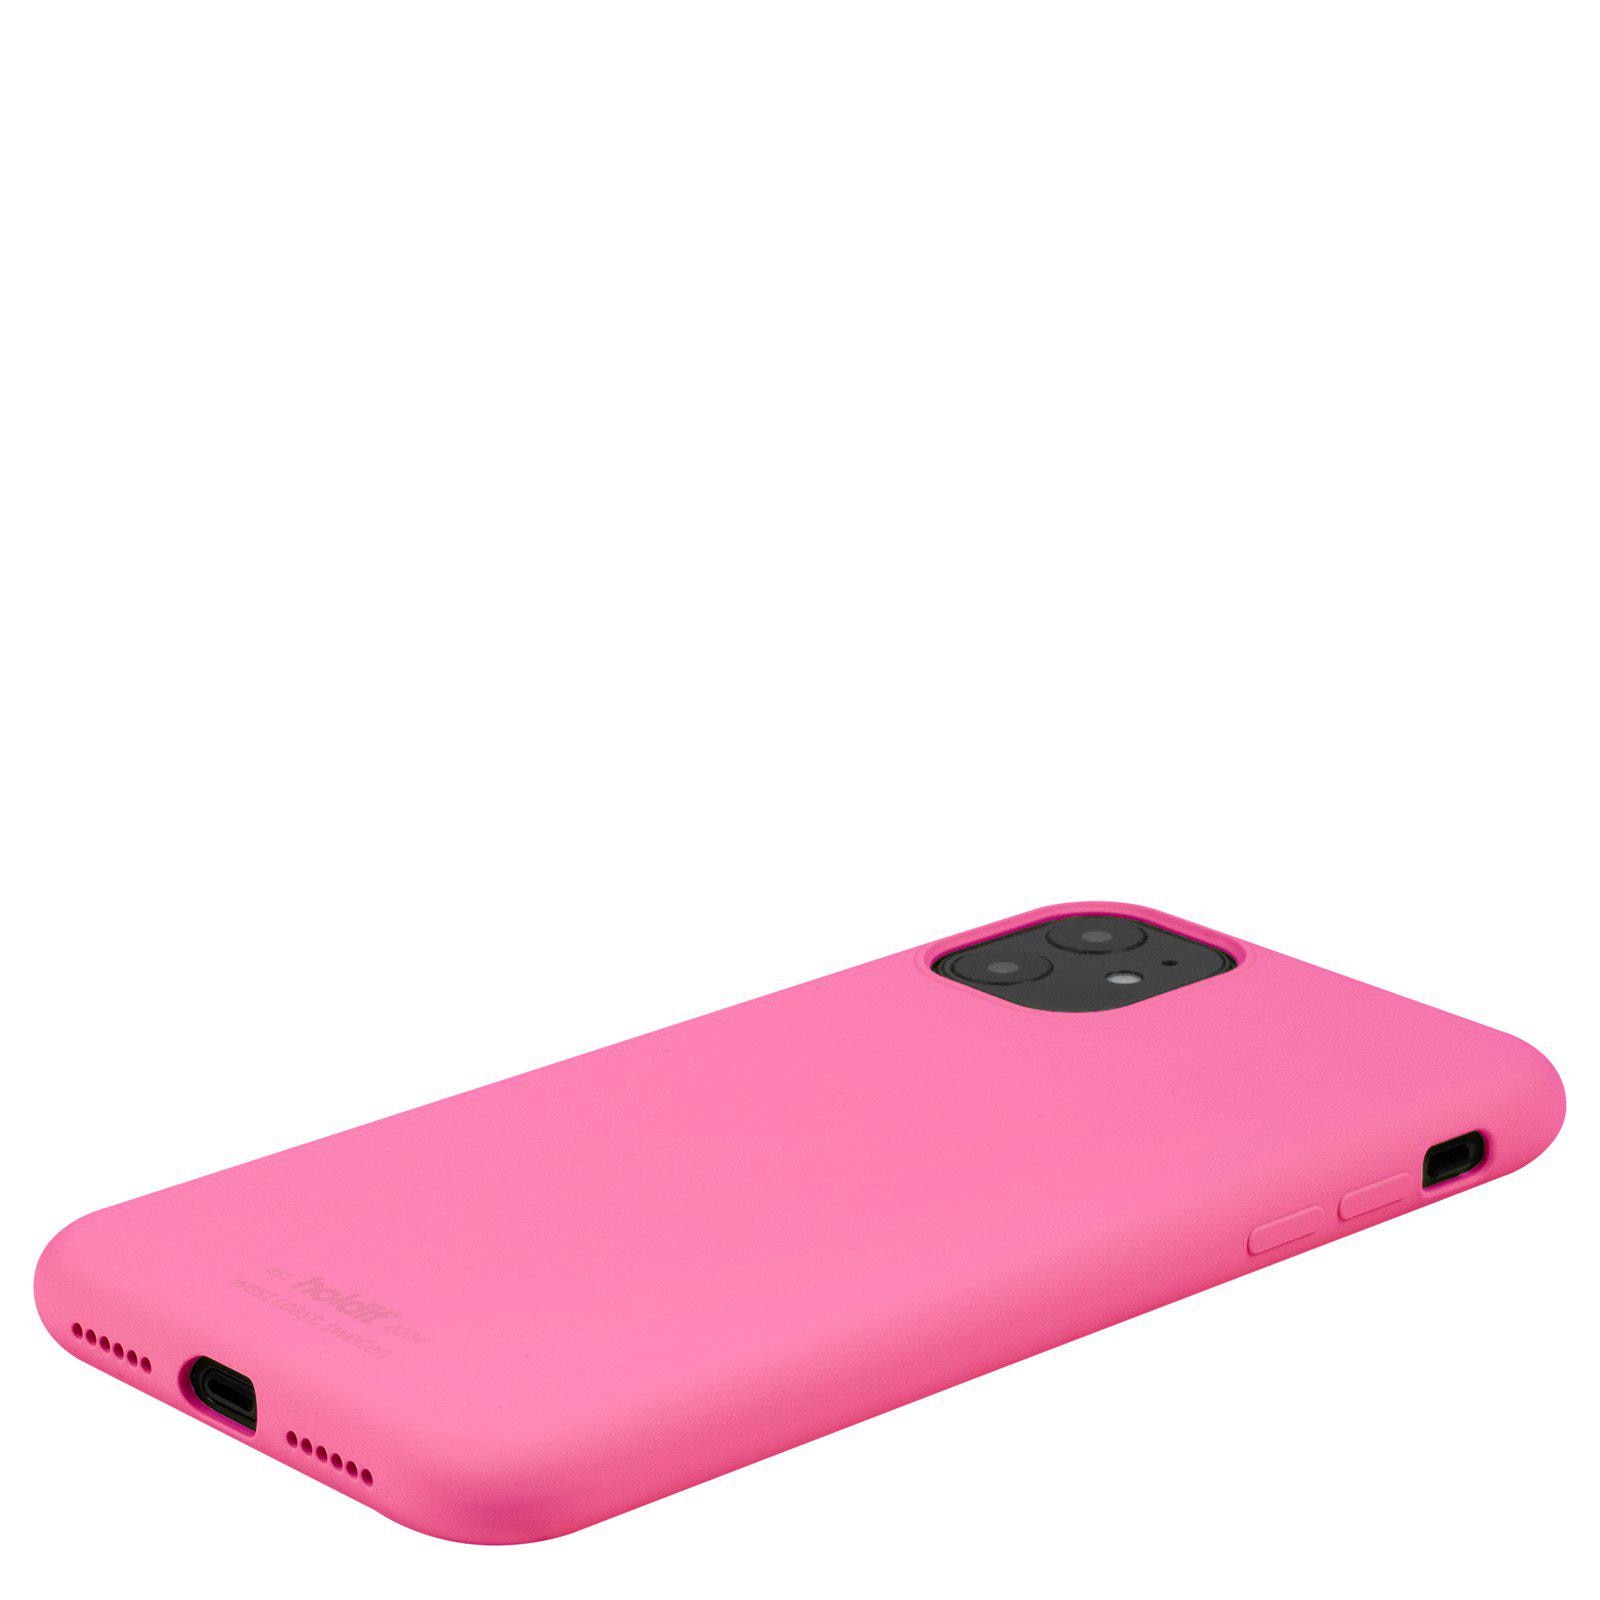 Silikonhülle iPhone XR Bright Pink